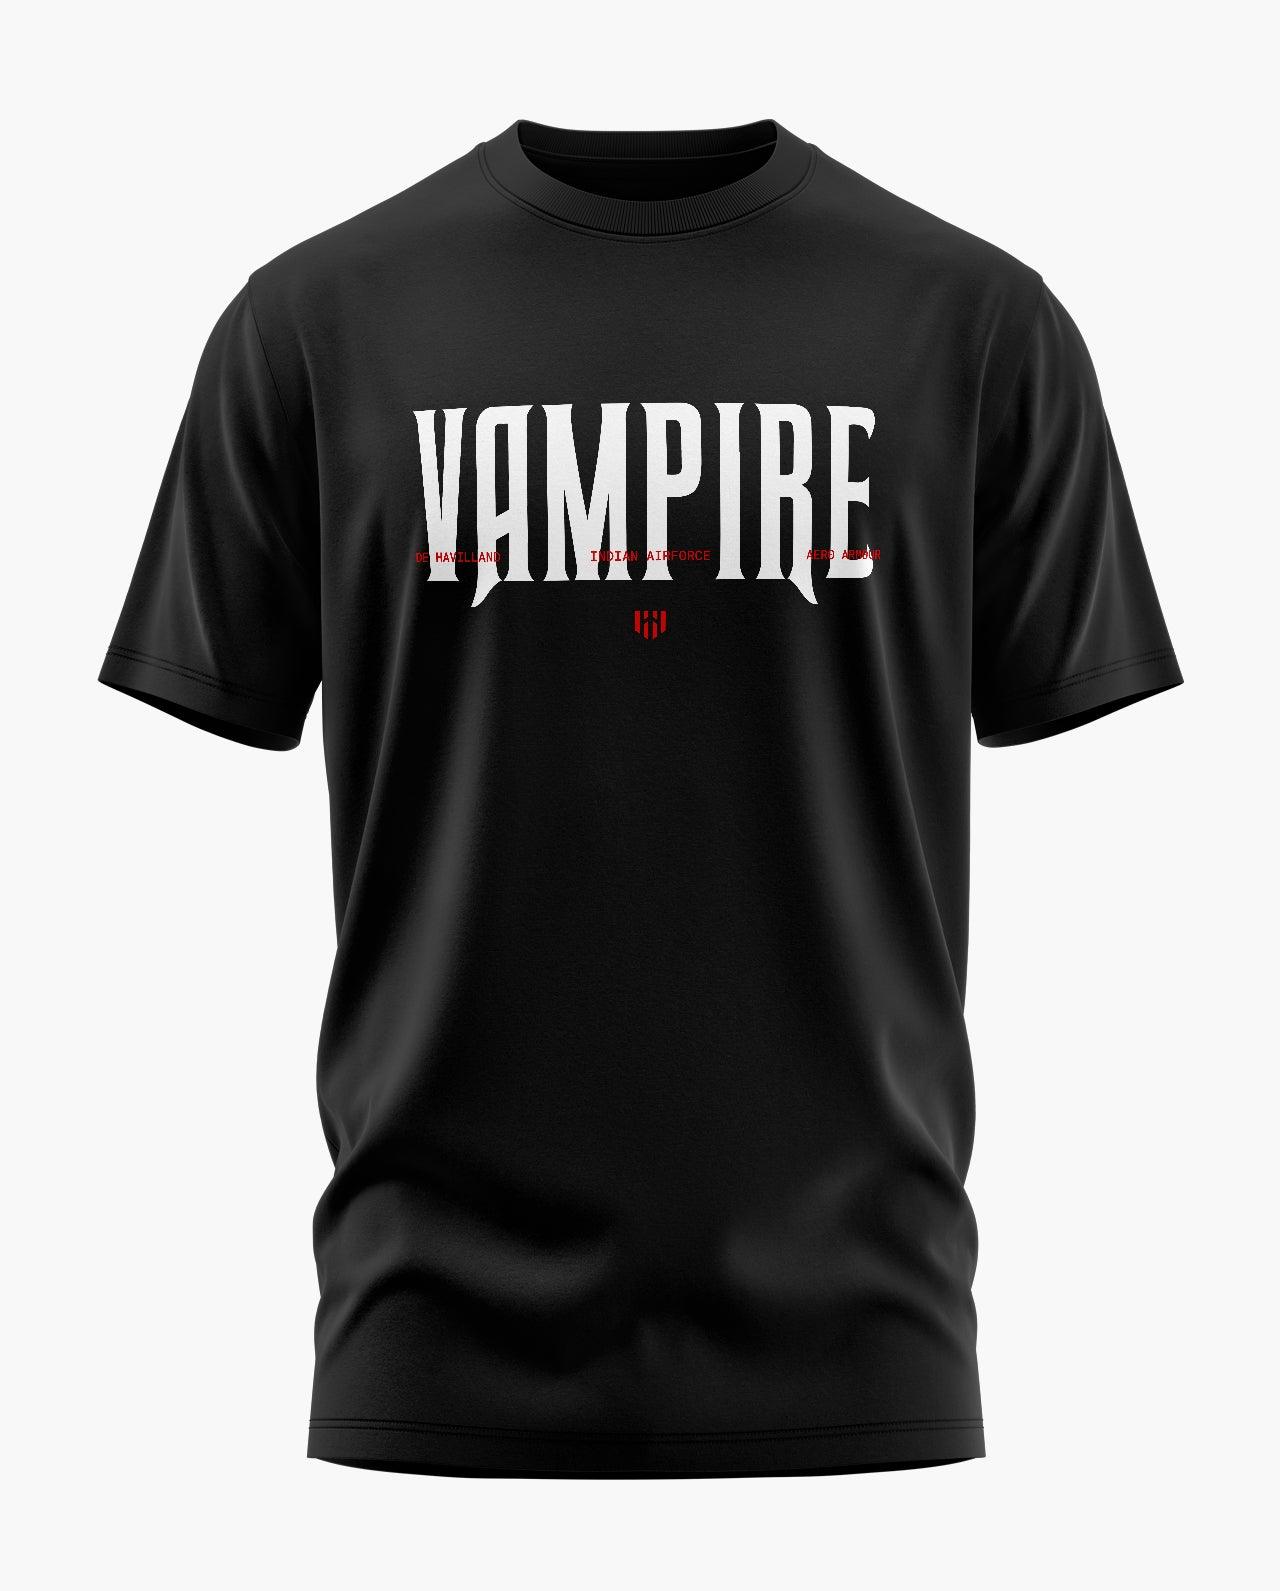 Vampire T-Shirt - Aero Armour